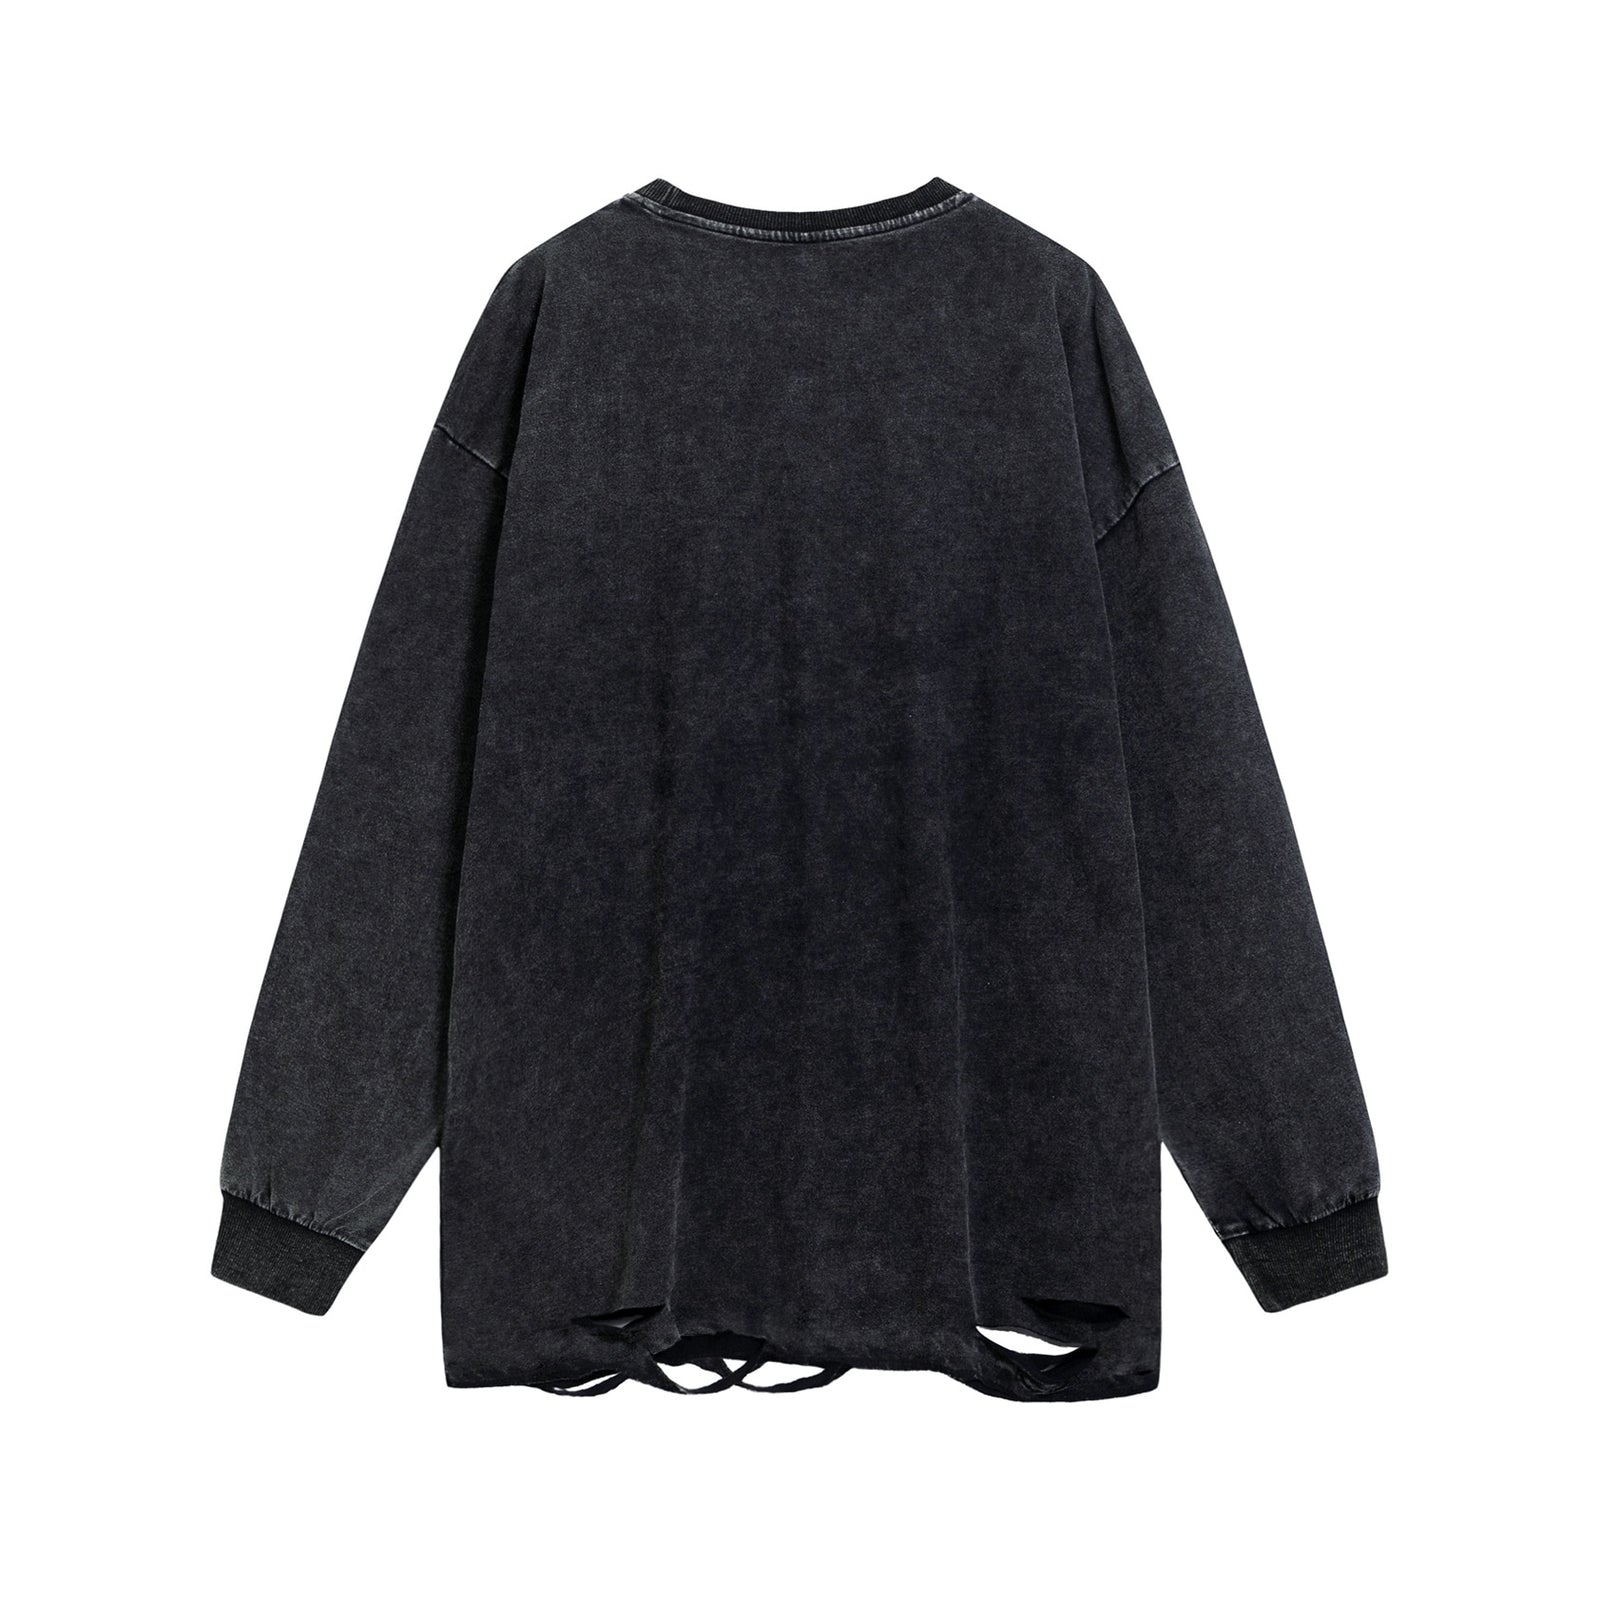 Autumn Vintage Ripped Sweatshirt Men Fashion Harajuku Hoodies Print Wizard Pullover Hip Hop Streetwear Tops Men Clothes